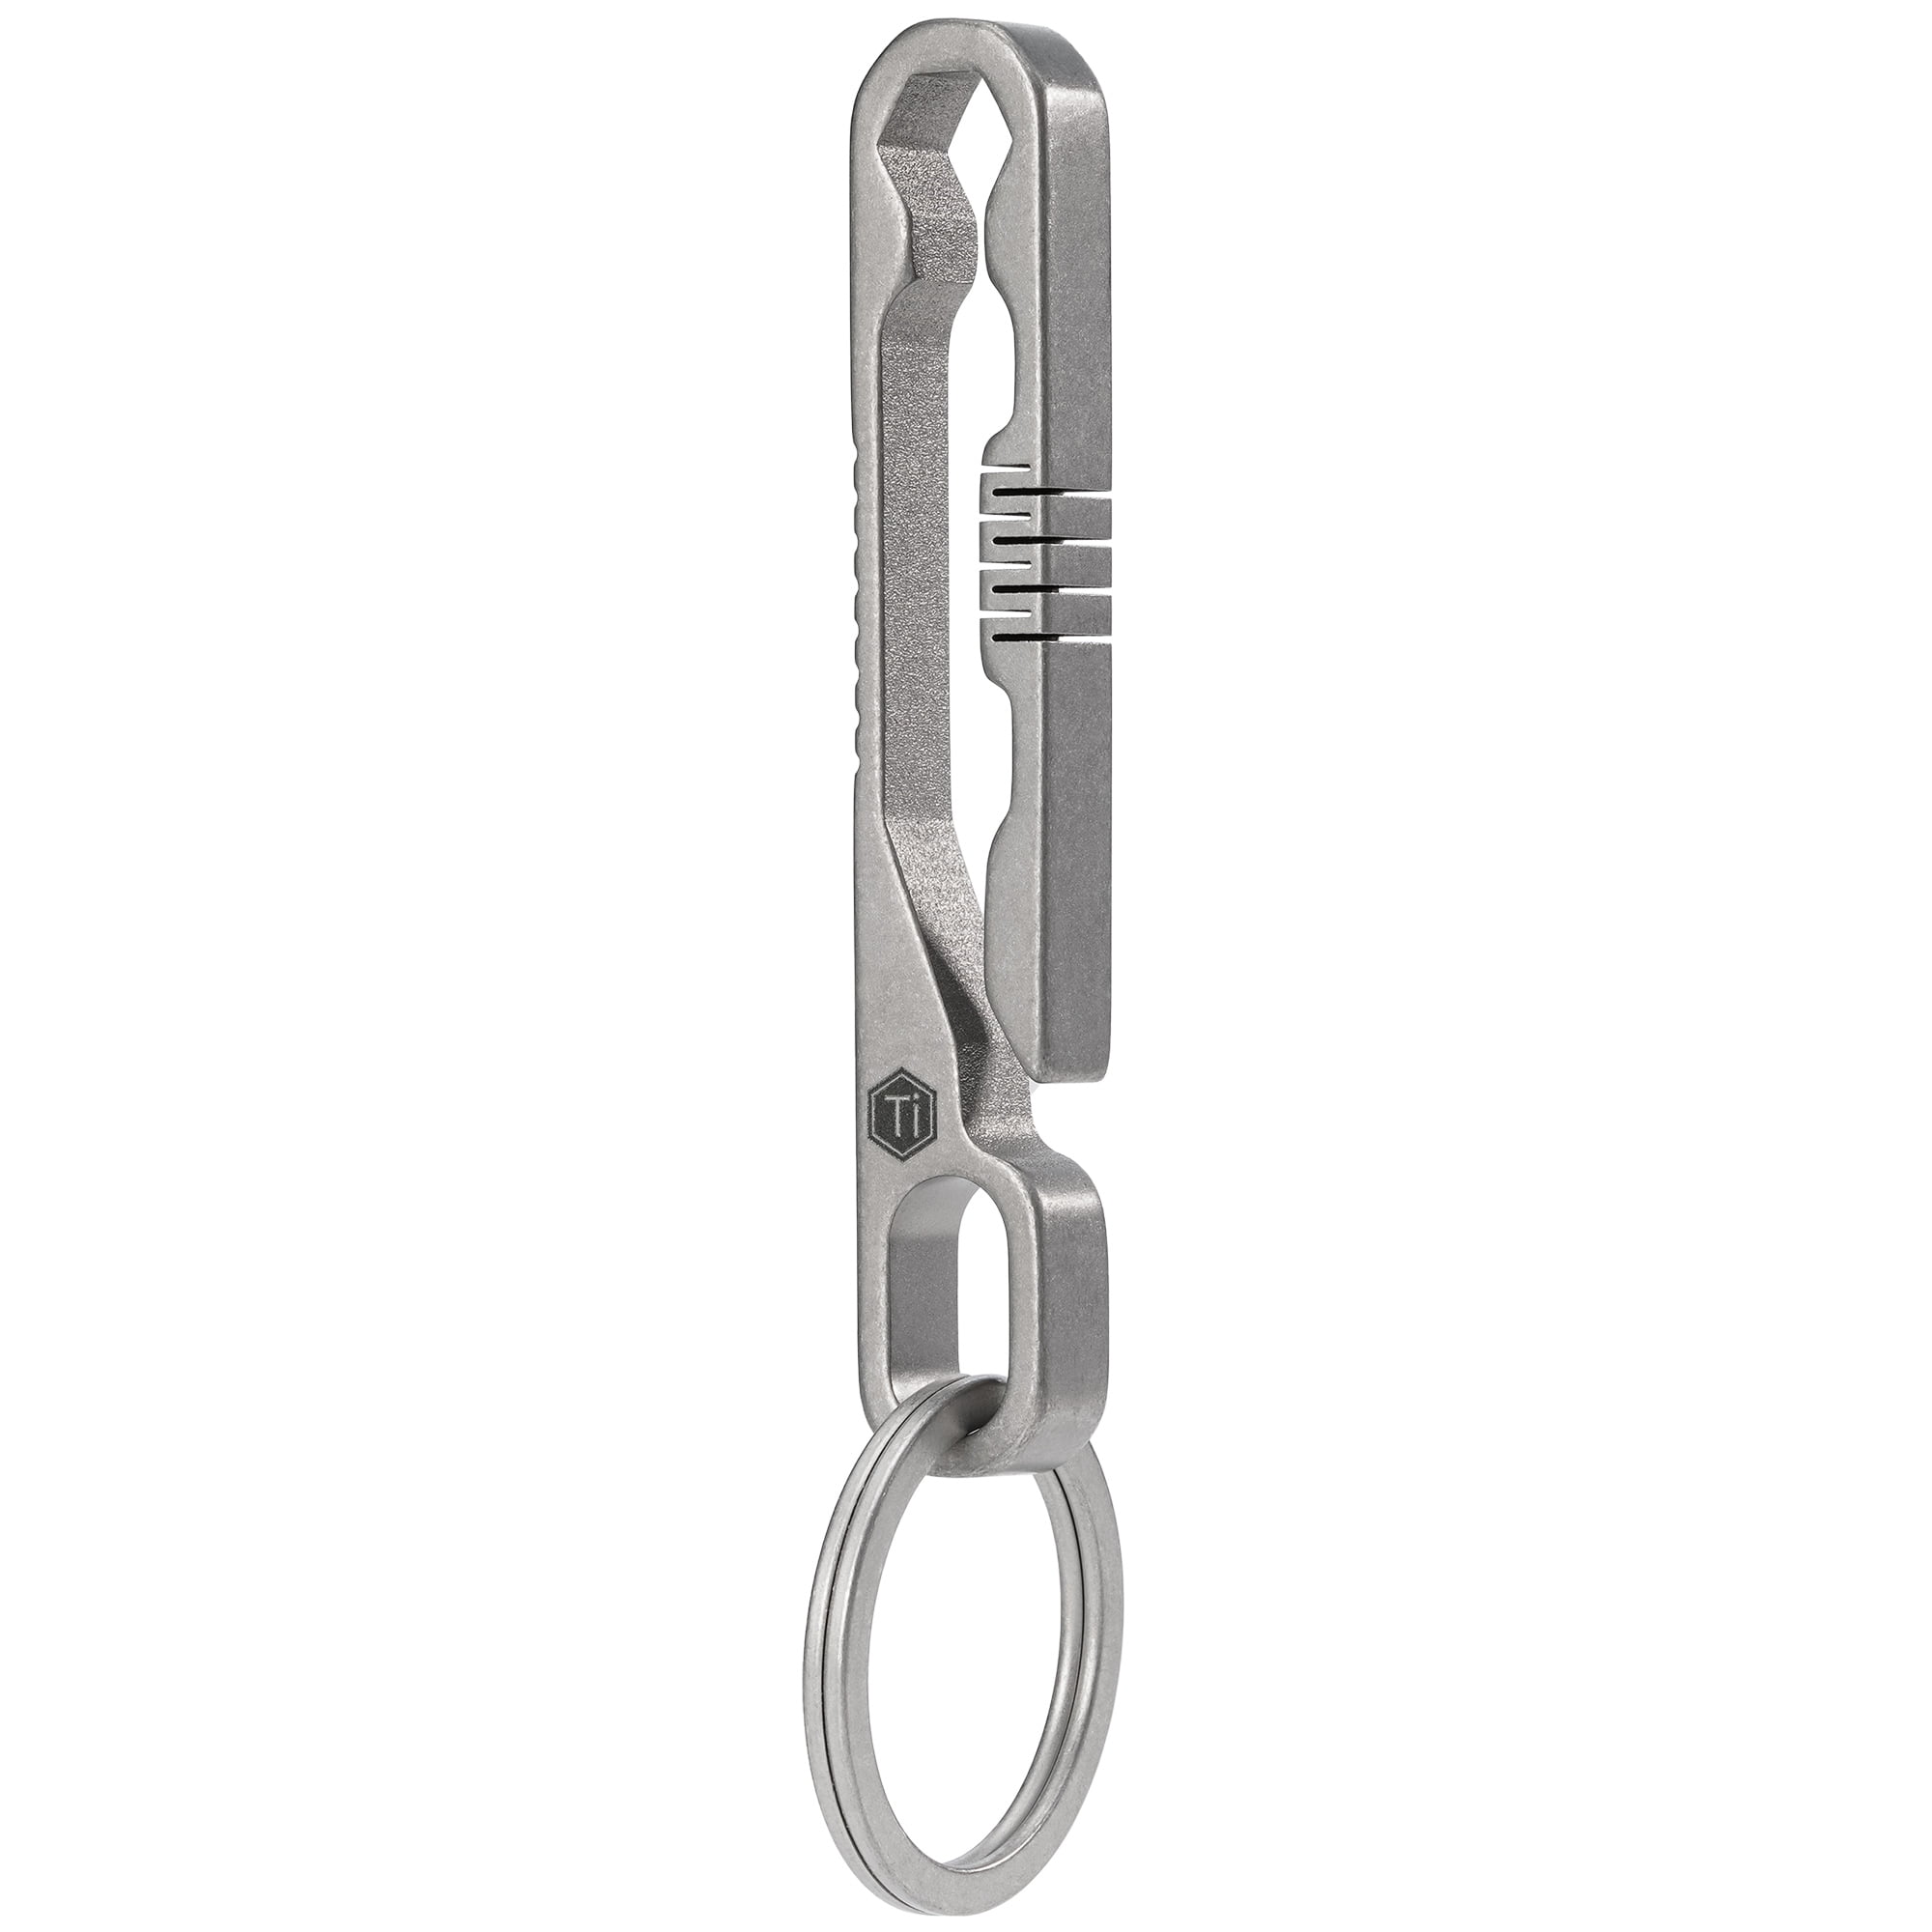 KeyUnity Double Side Carabiner Keychain Clip, KM11 Titanium Belt Key Holder Clips for Car Keys or Small Tools, Gray, Adult Unisex, Size: Keychain 2.95